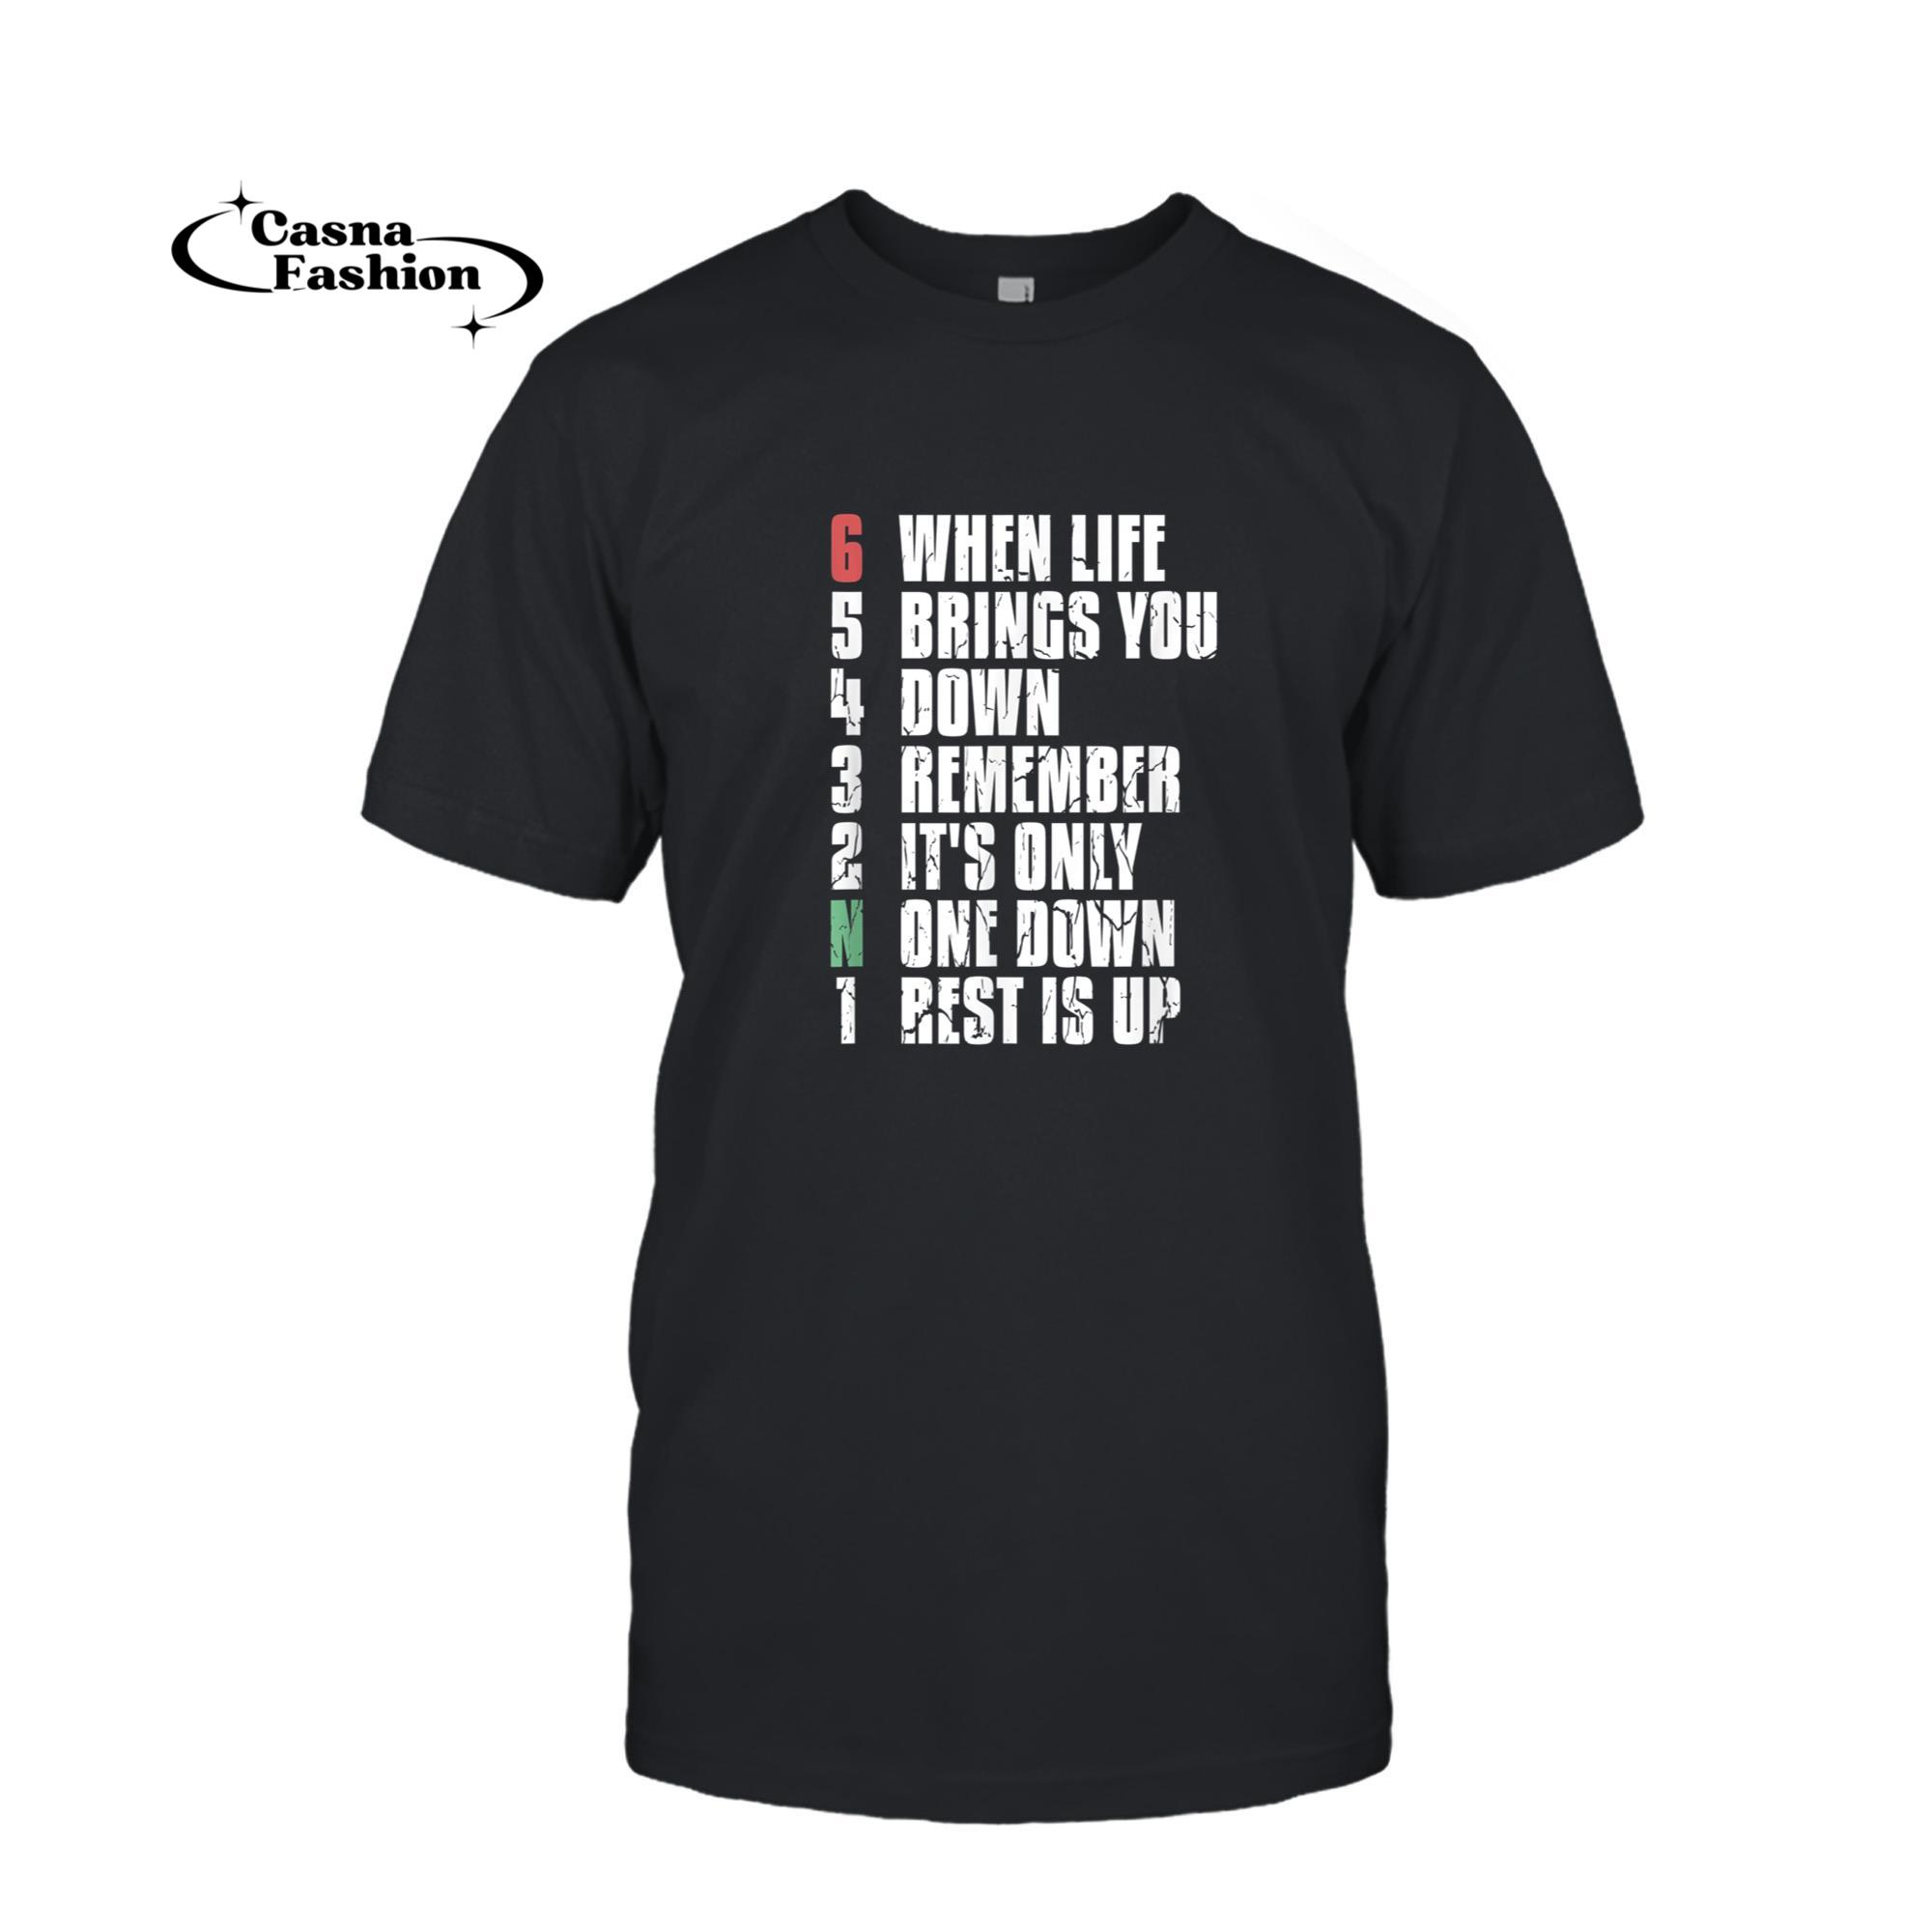 casnafashion_T-shirt_1N23456 Engranajes de Moto Gift for Motorcycle T-Shirt_T-shirt_Black